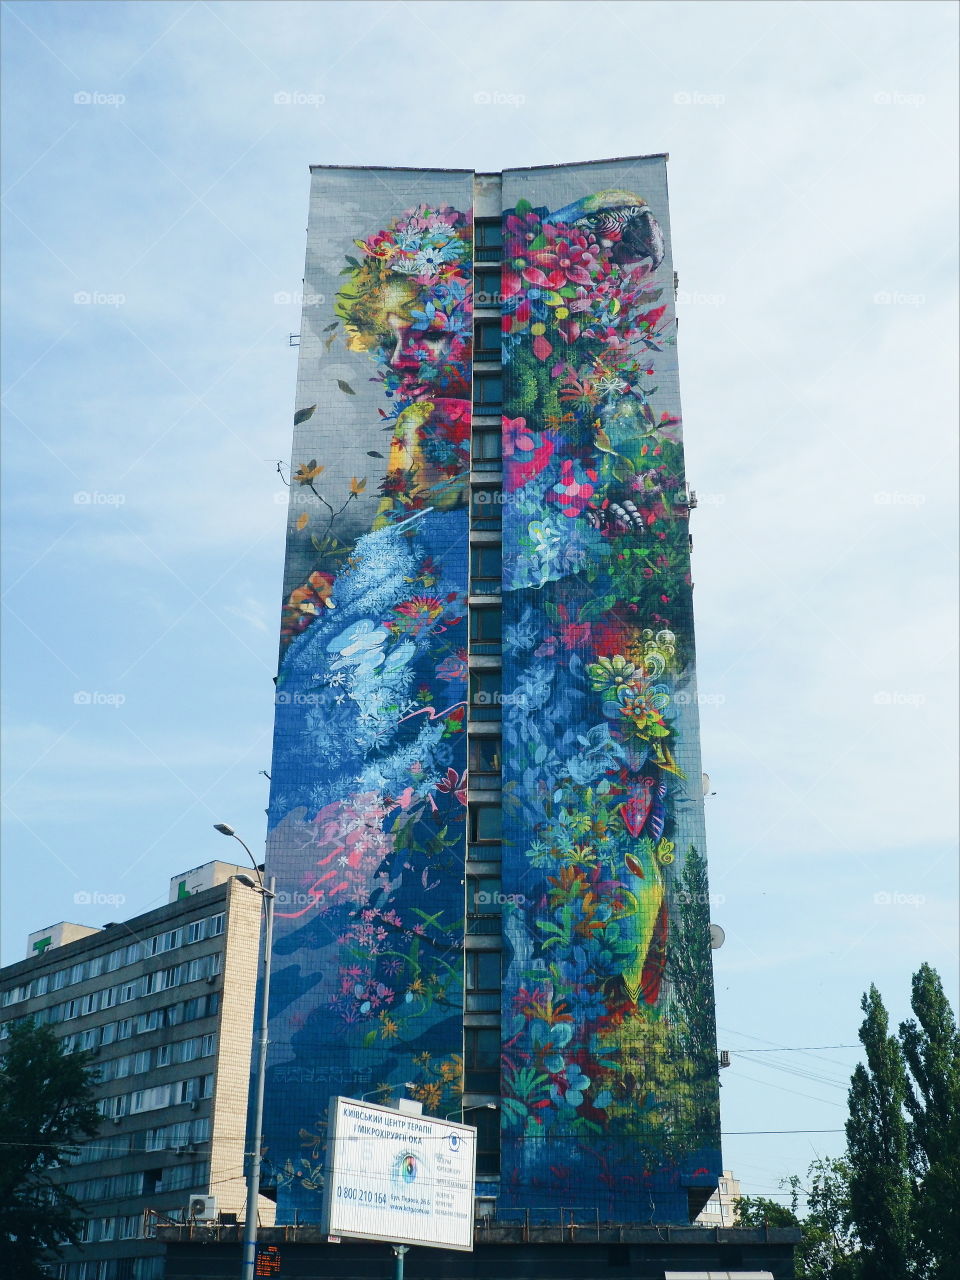 Graffiti on the building